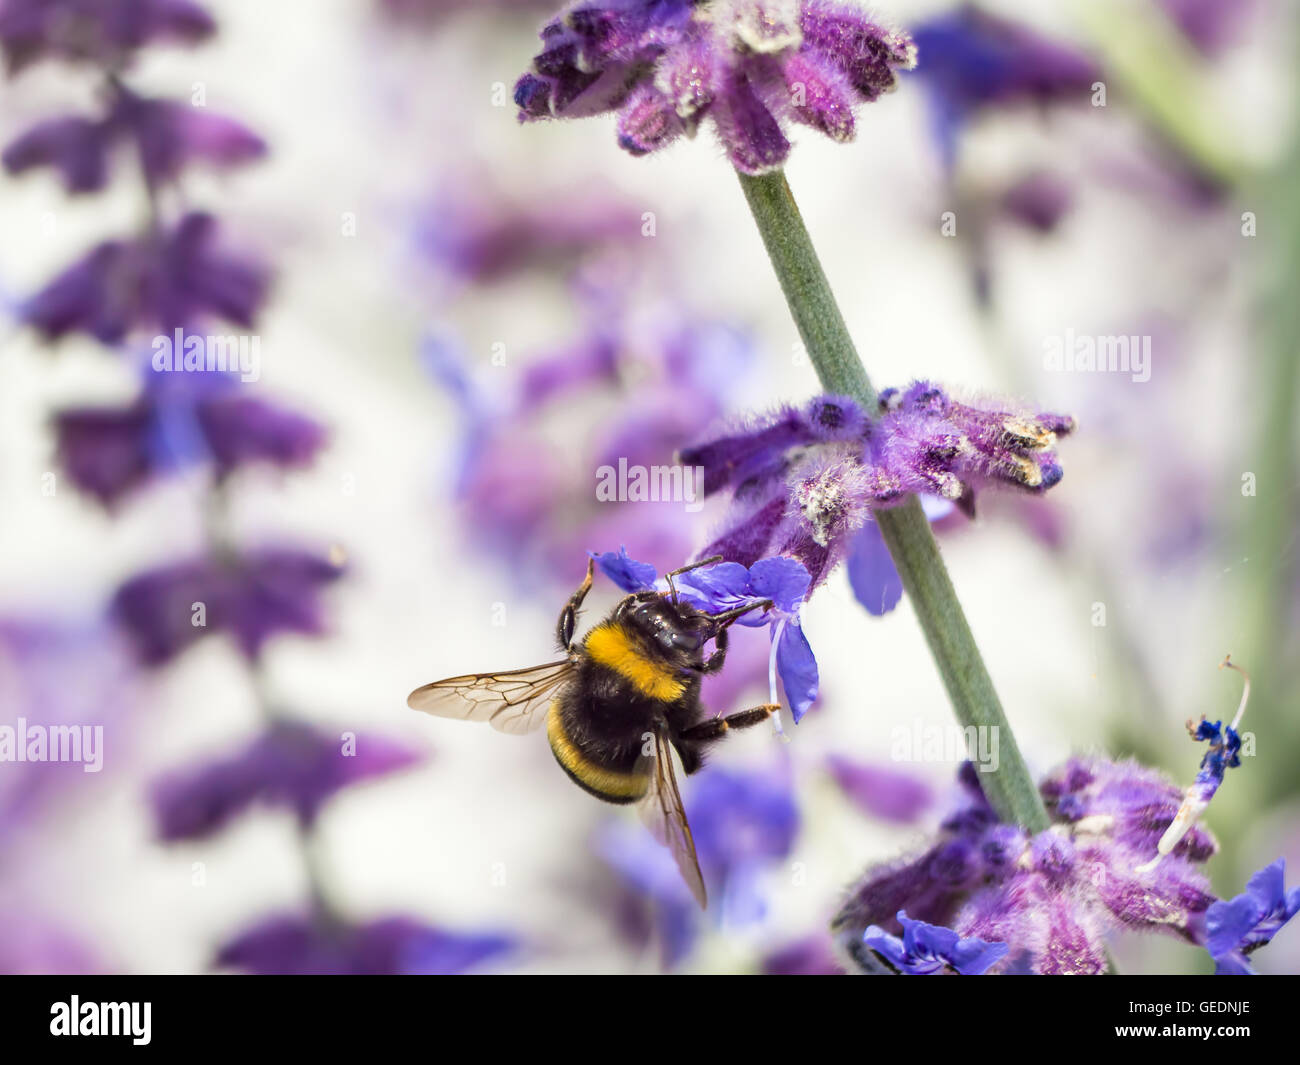 Bumblebee pollinating garden flowers Stock Photo